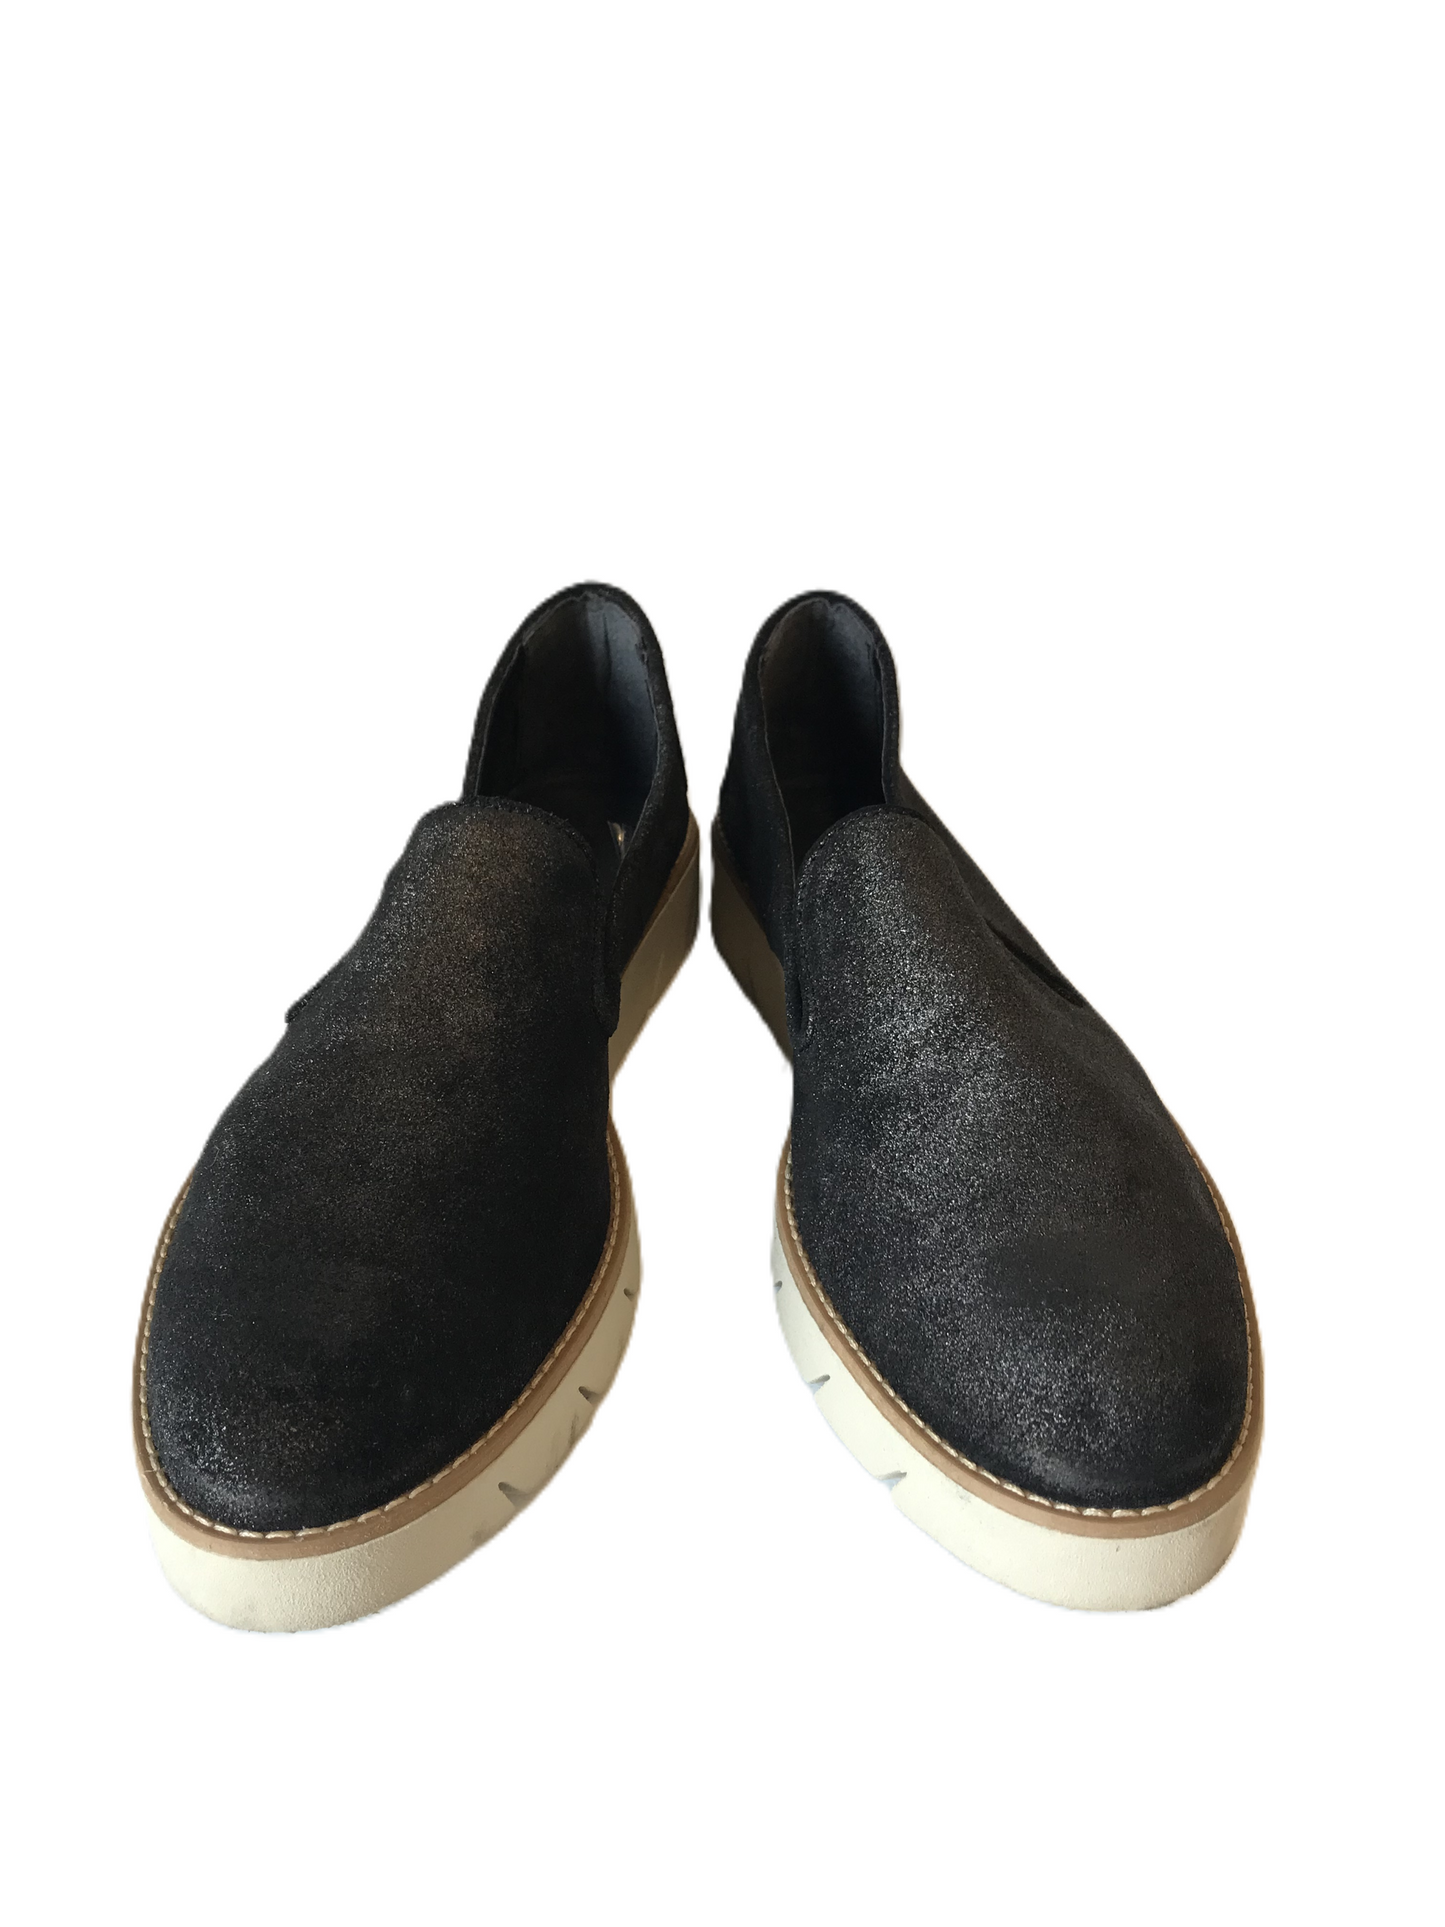 Black Shoes Flats By The Flexx  Size: 10